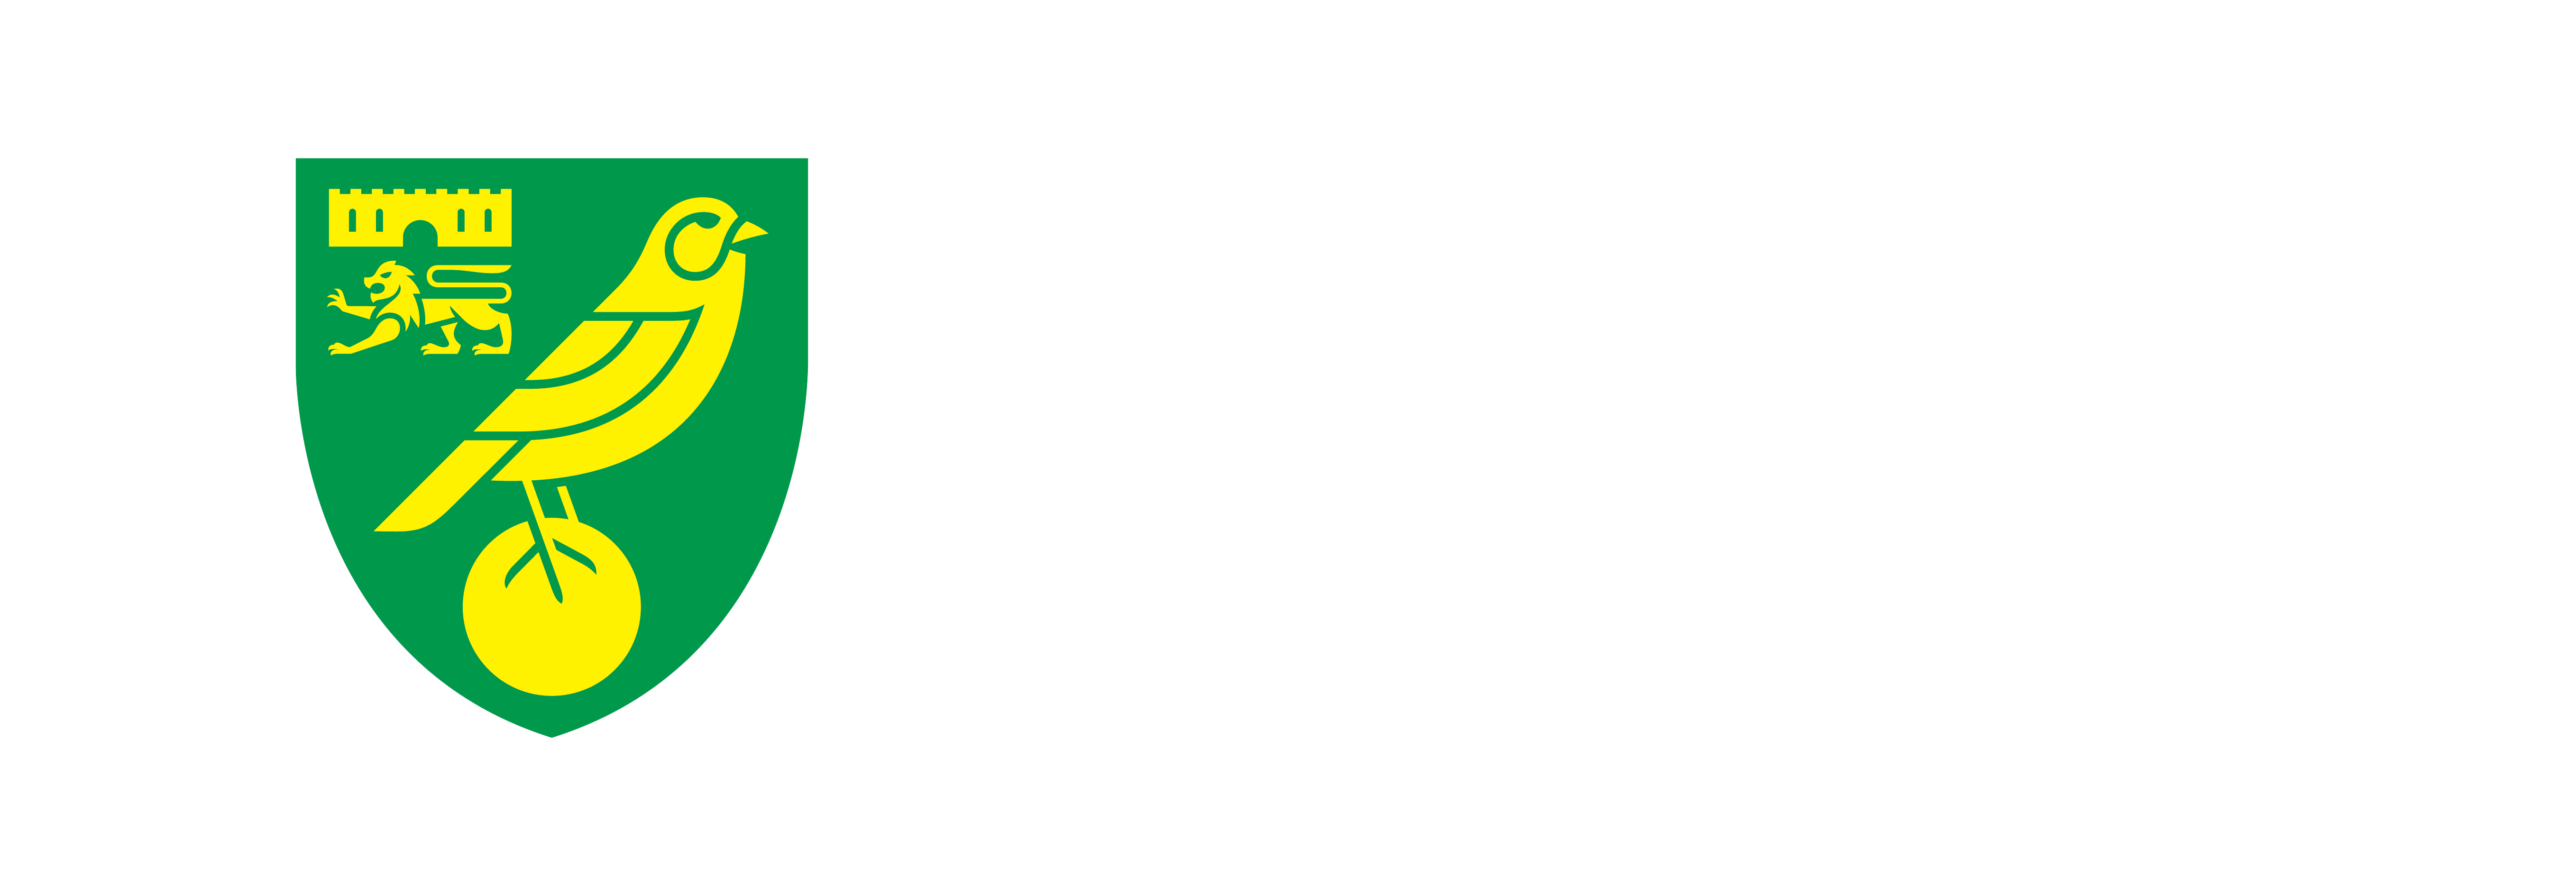 Norwich City Football Club community partner logo